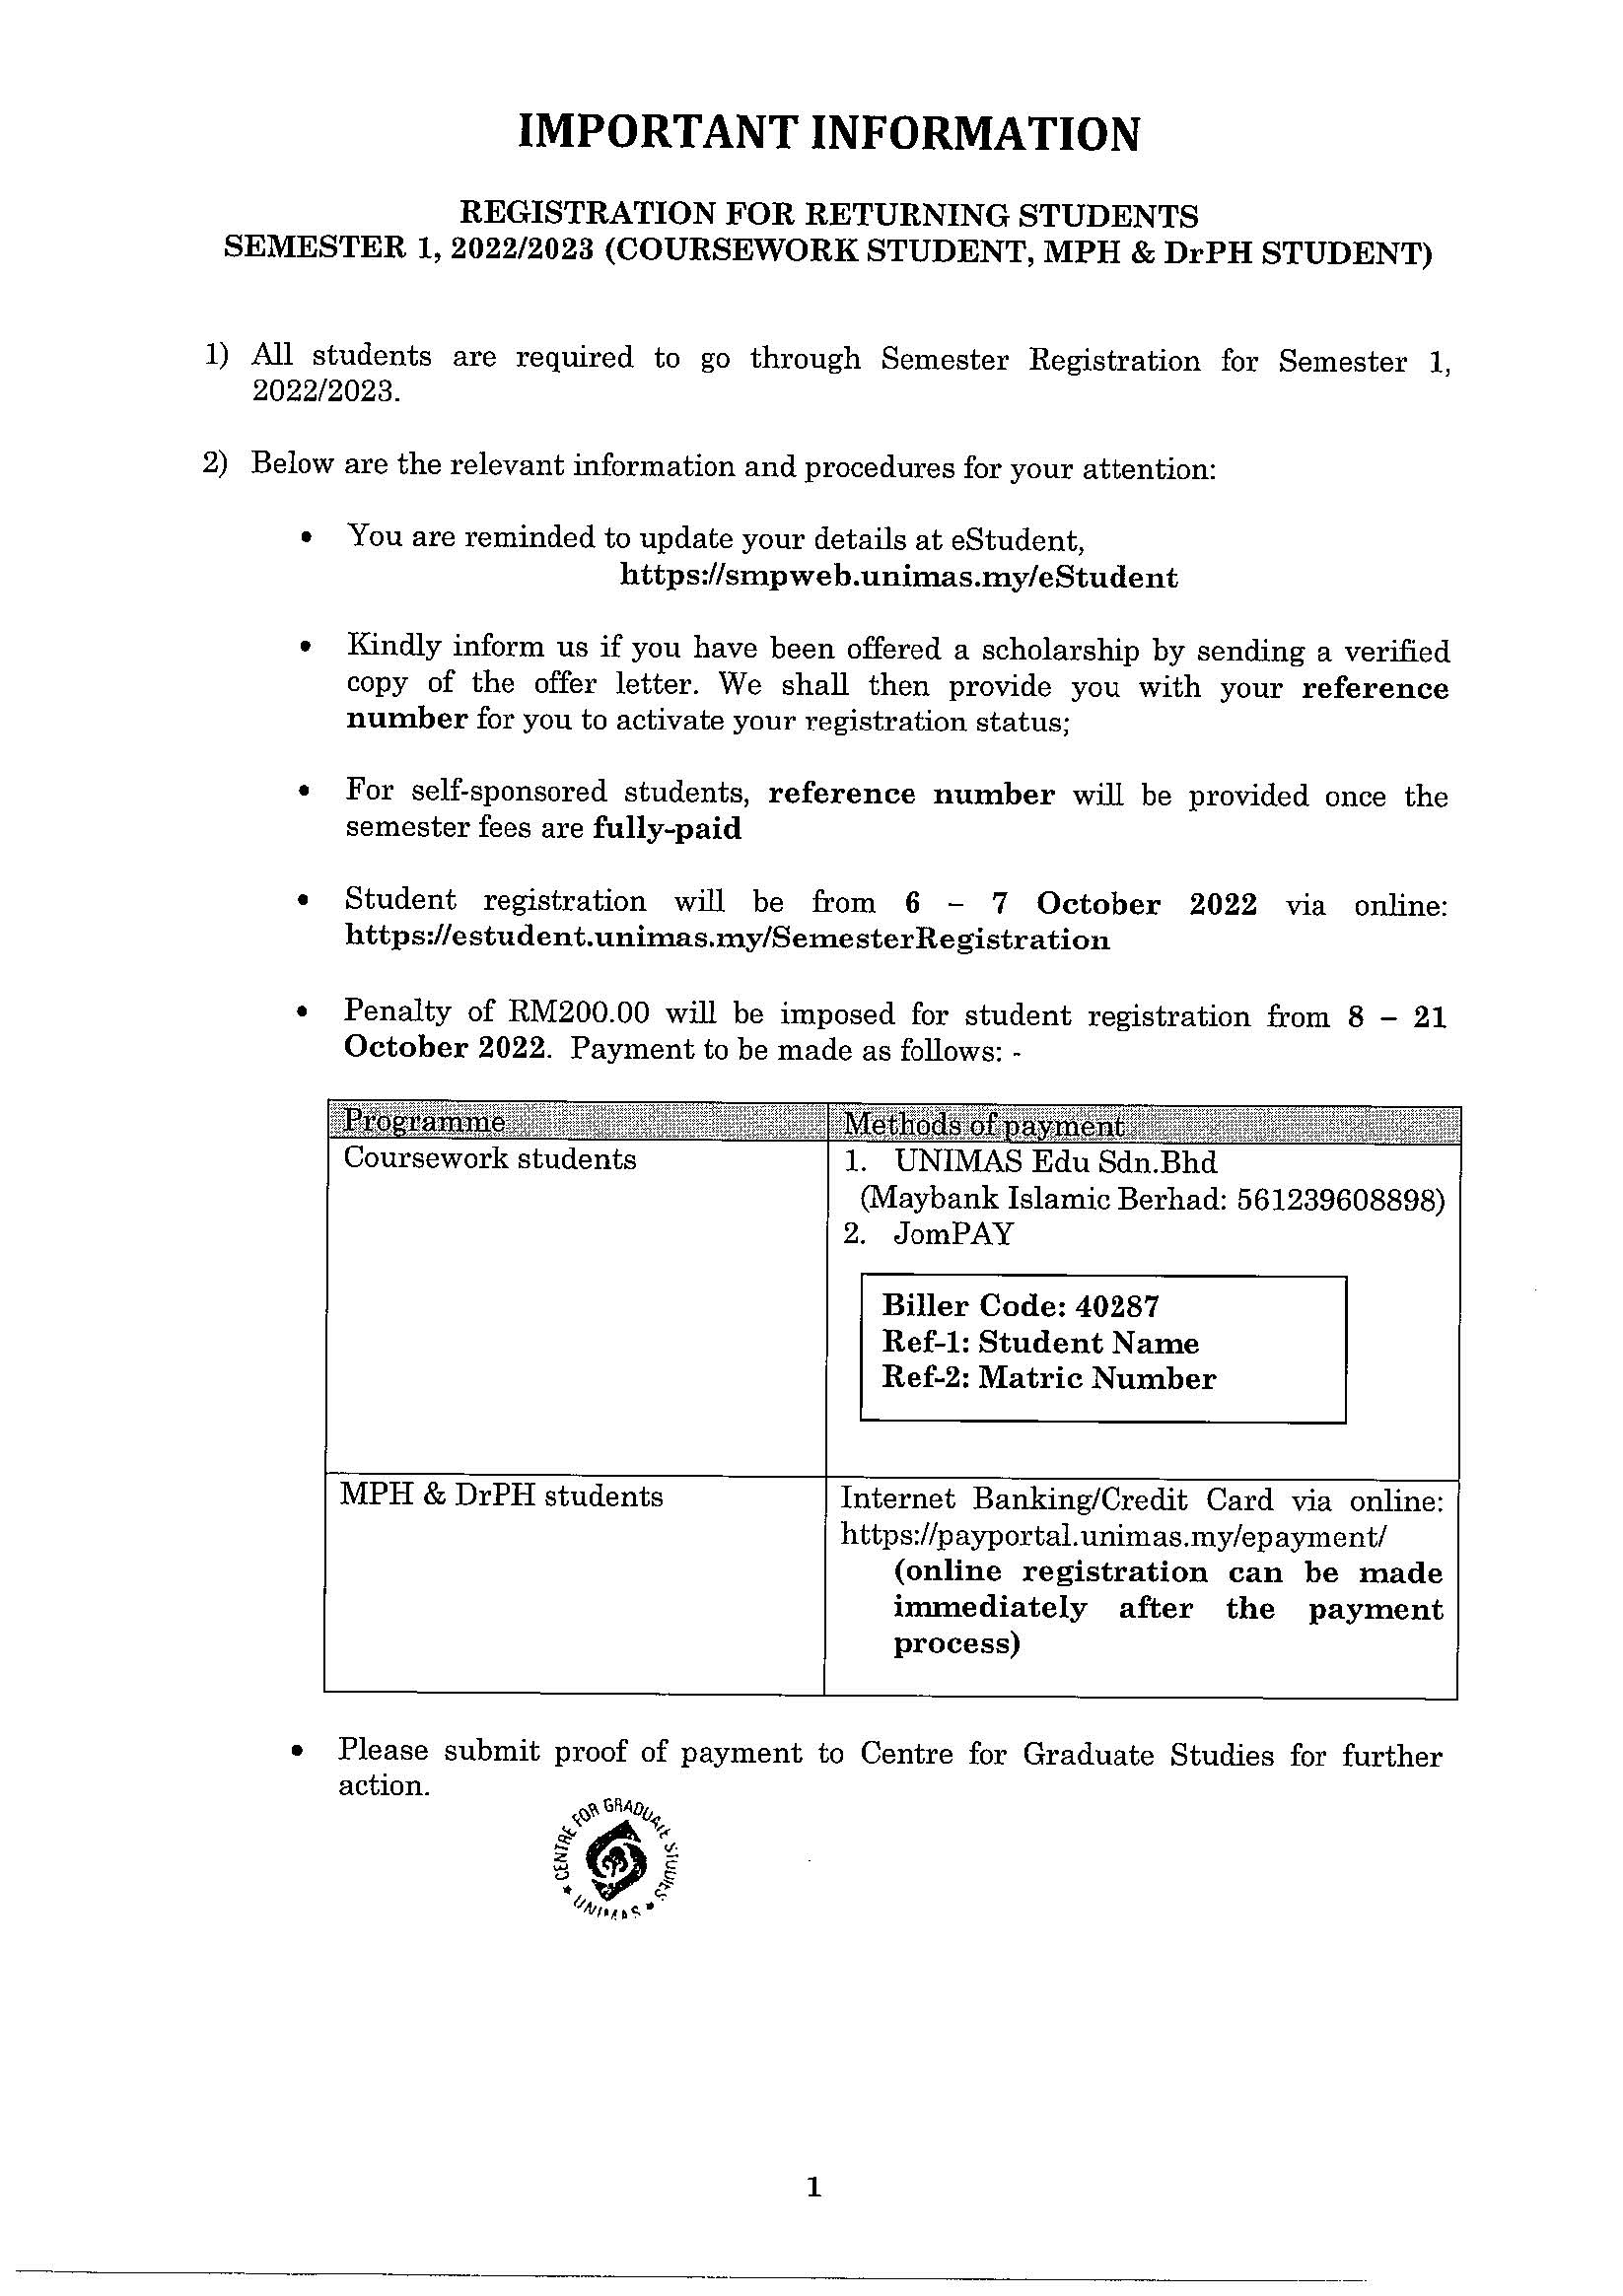 amendments notice of registration for returning student Sem 1 2022 2023 (CW MPH  DrPH).jpg